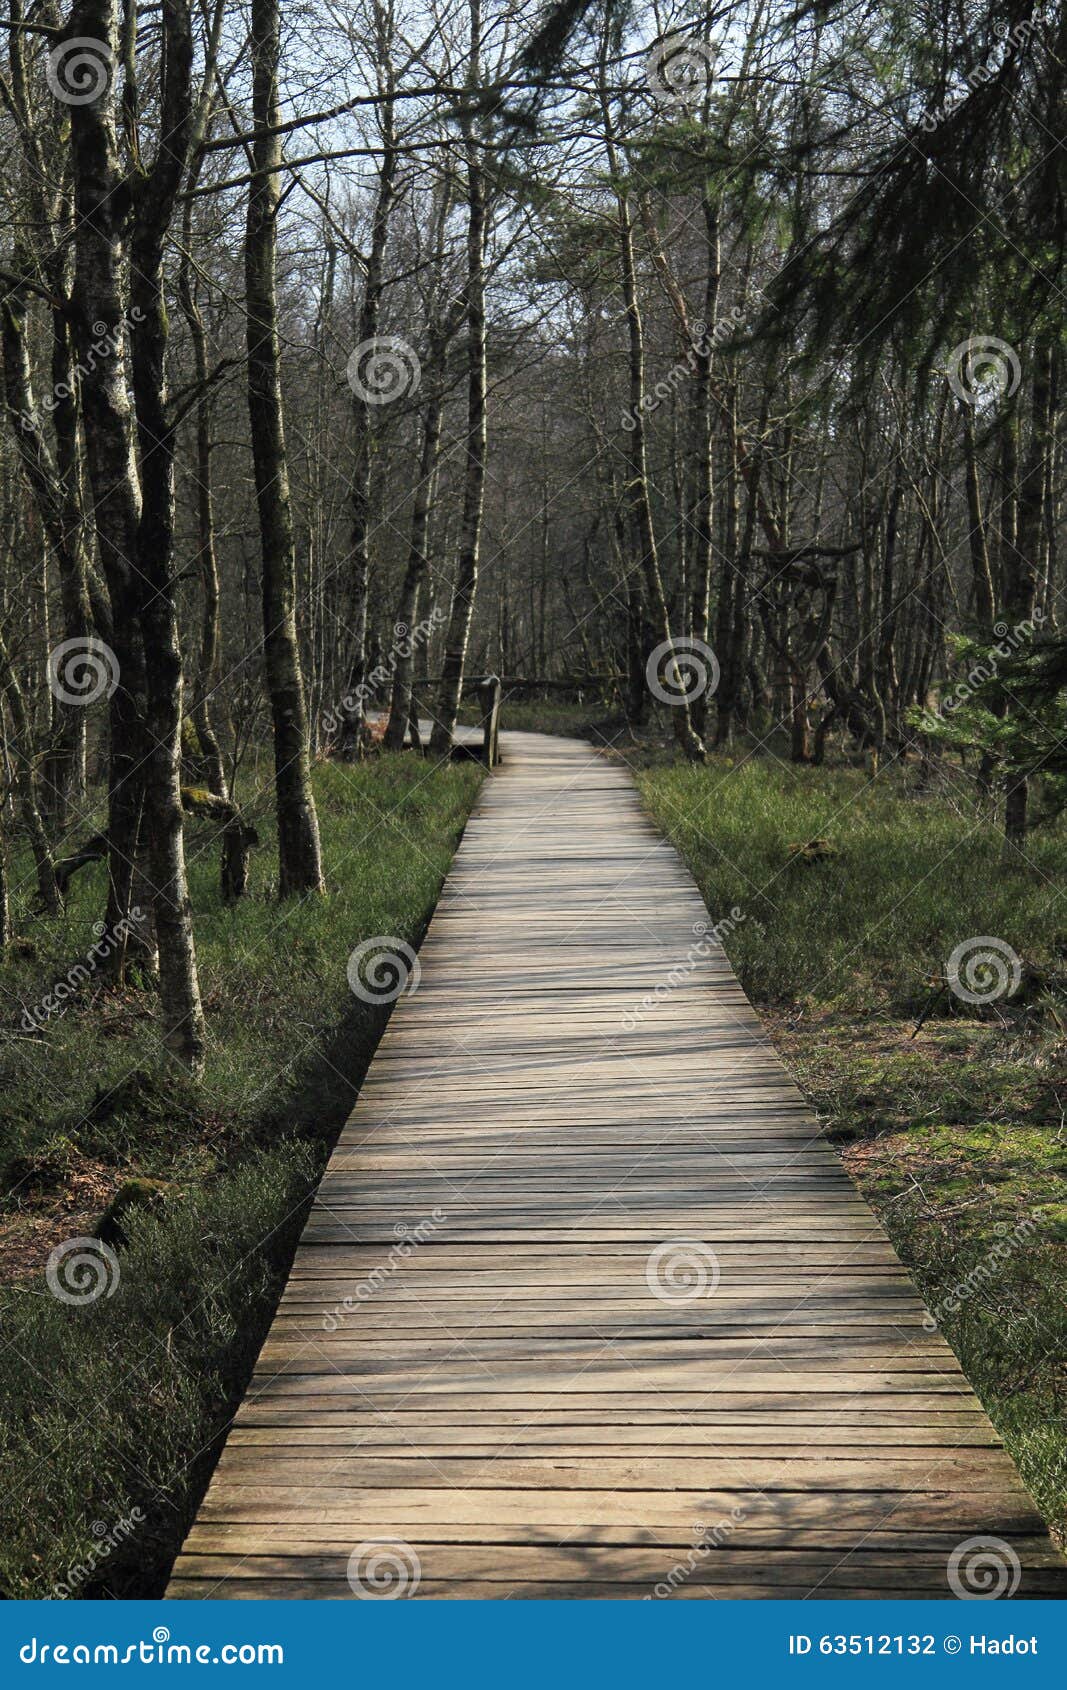 Wooden Footbridge Stock Photo - Image: 63512132